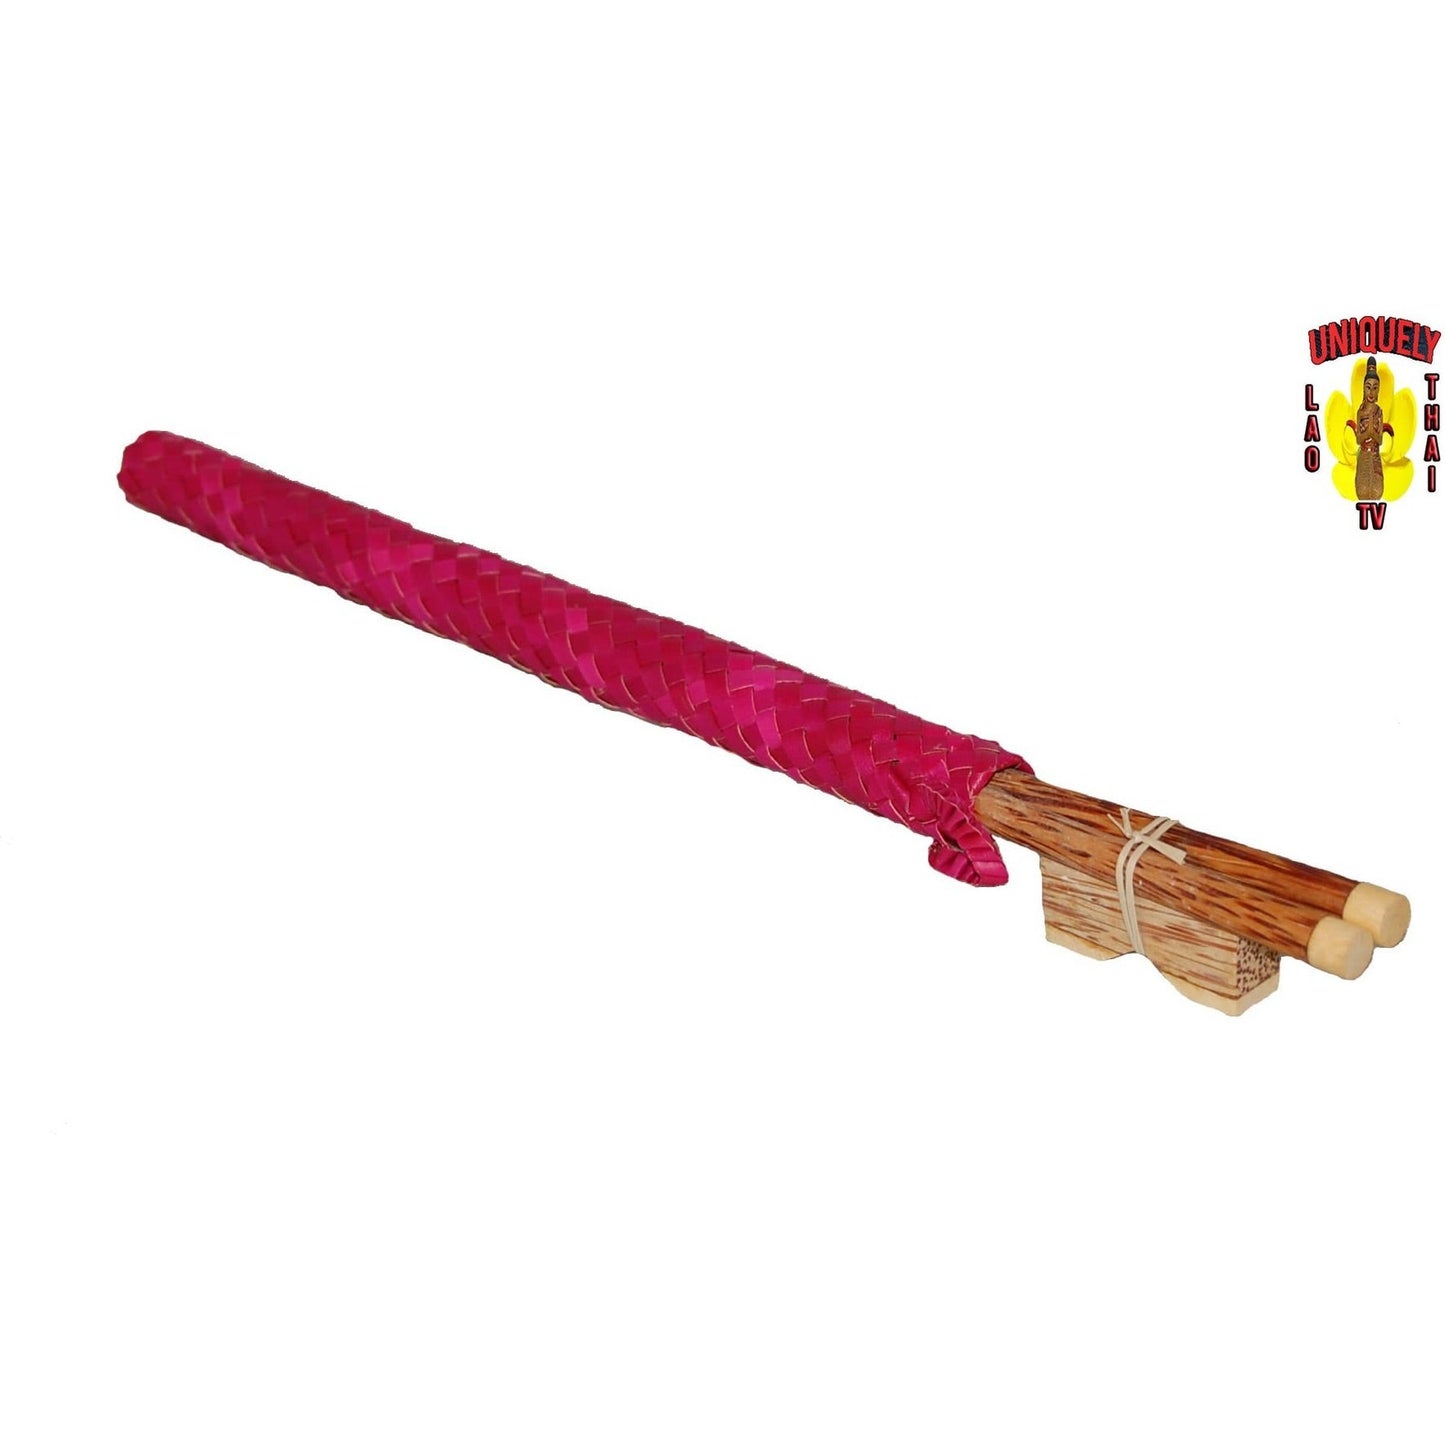 Wood Chopstick Red Wicker